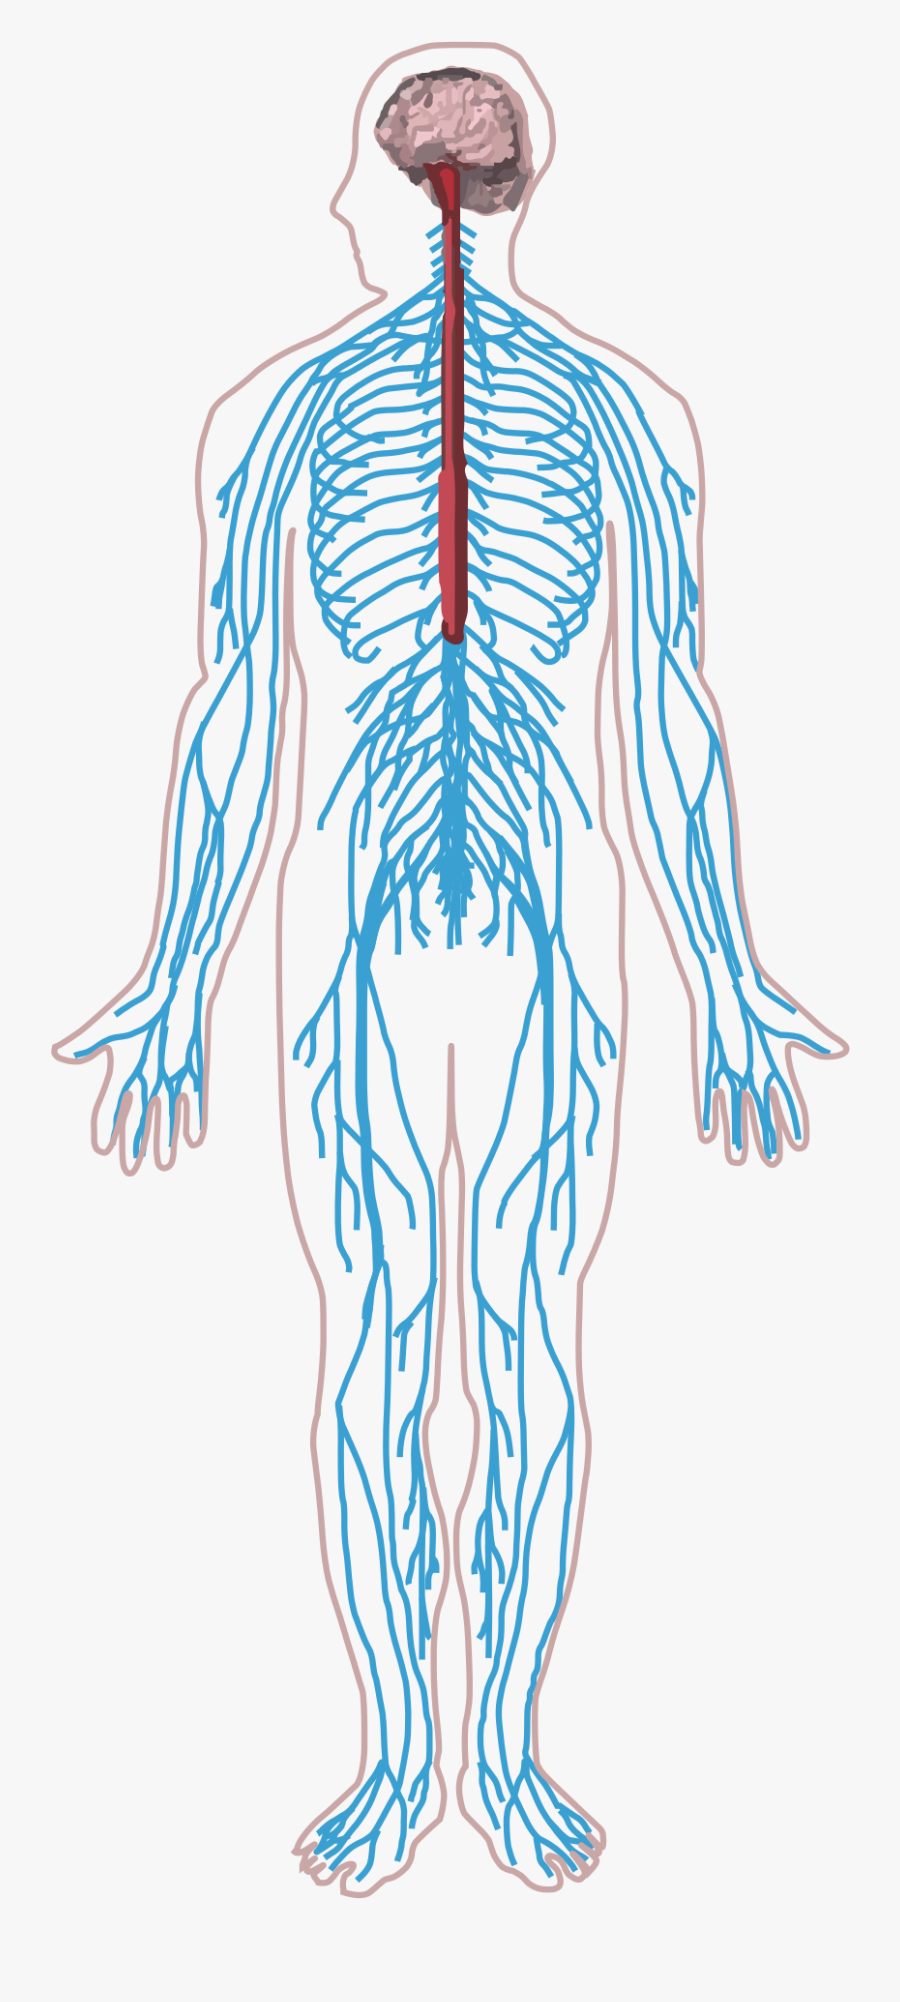 Peripheral Nervous System Png - Nervous System Diagram Png, Transparent Clipart